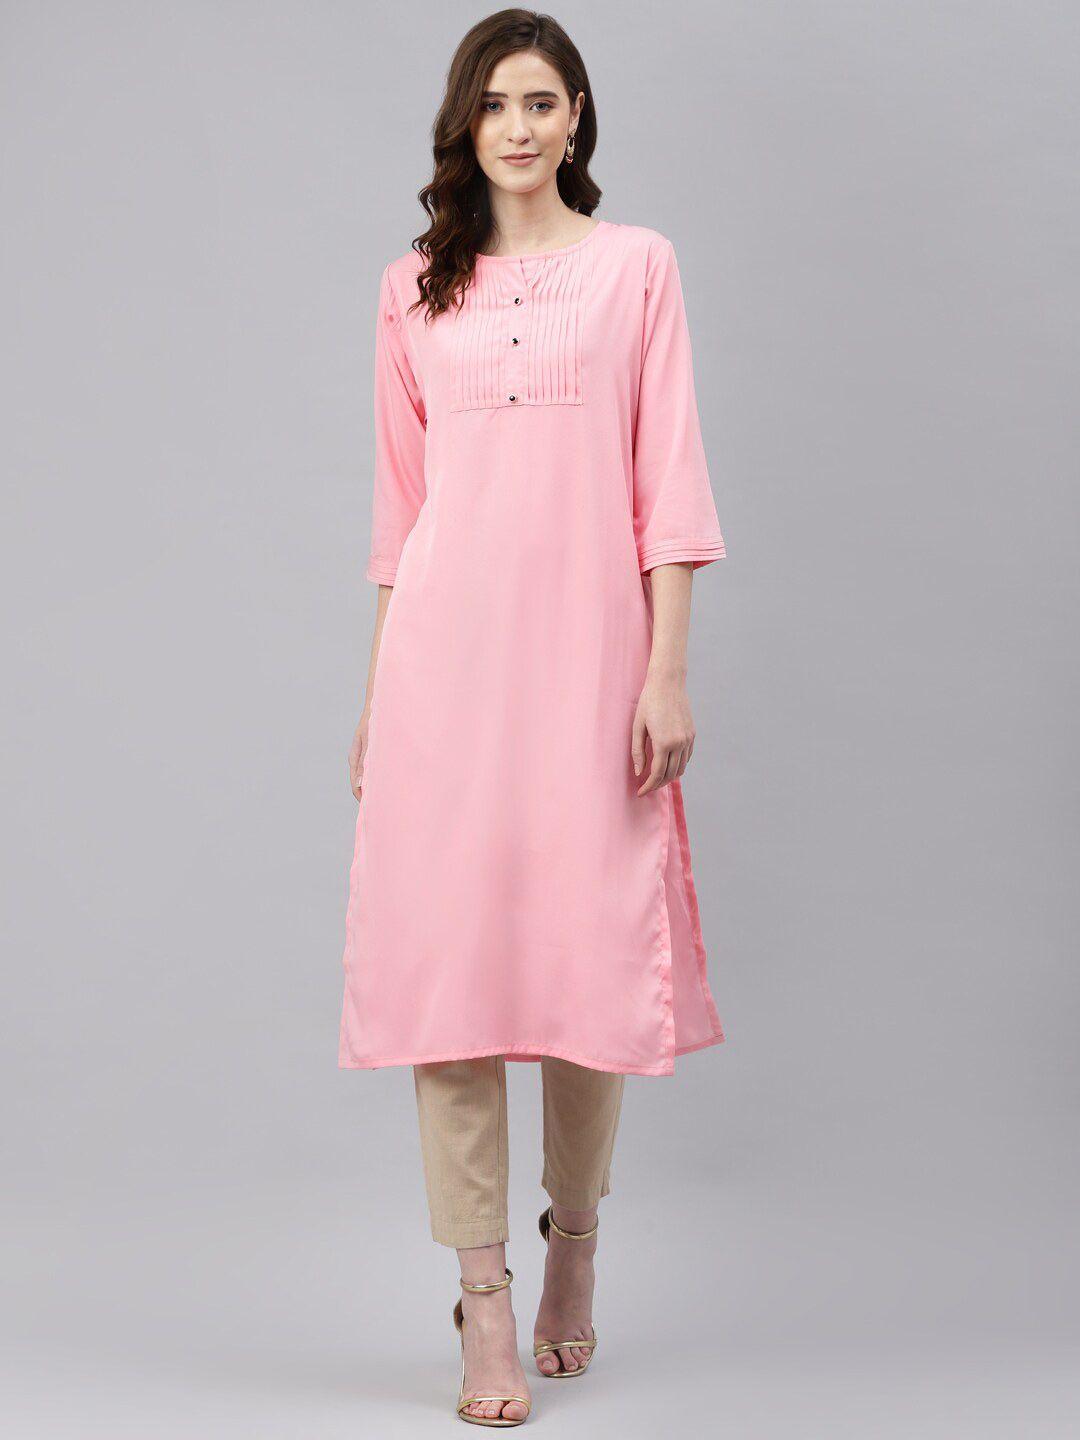 somras women pink pleated yoke design kurta